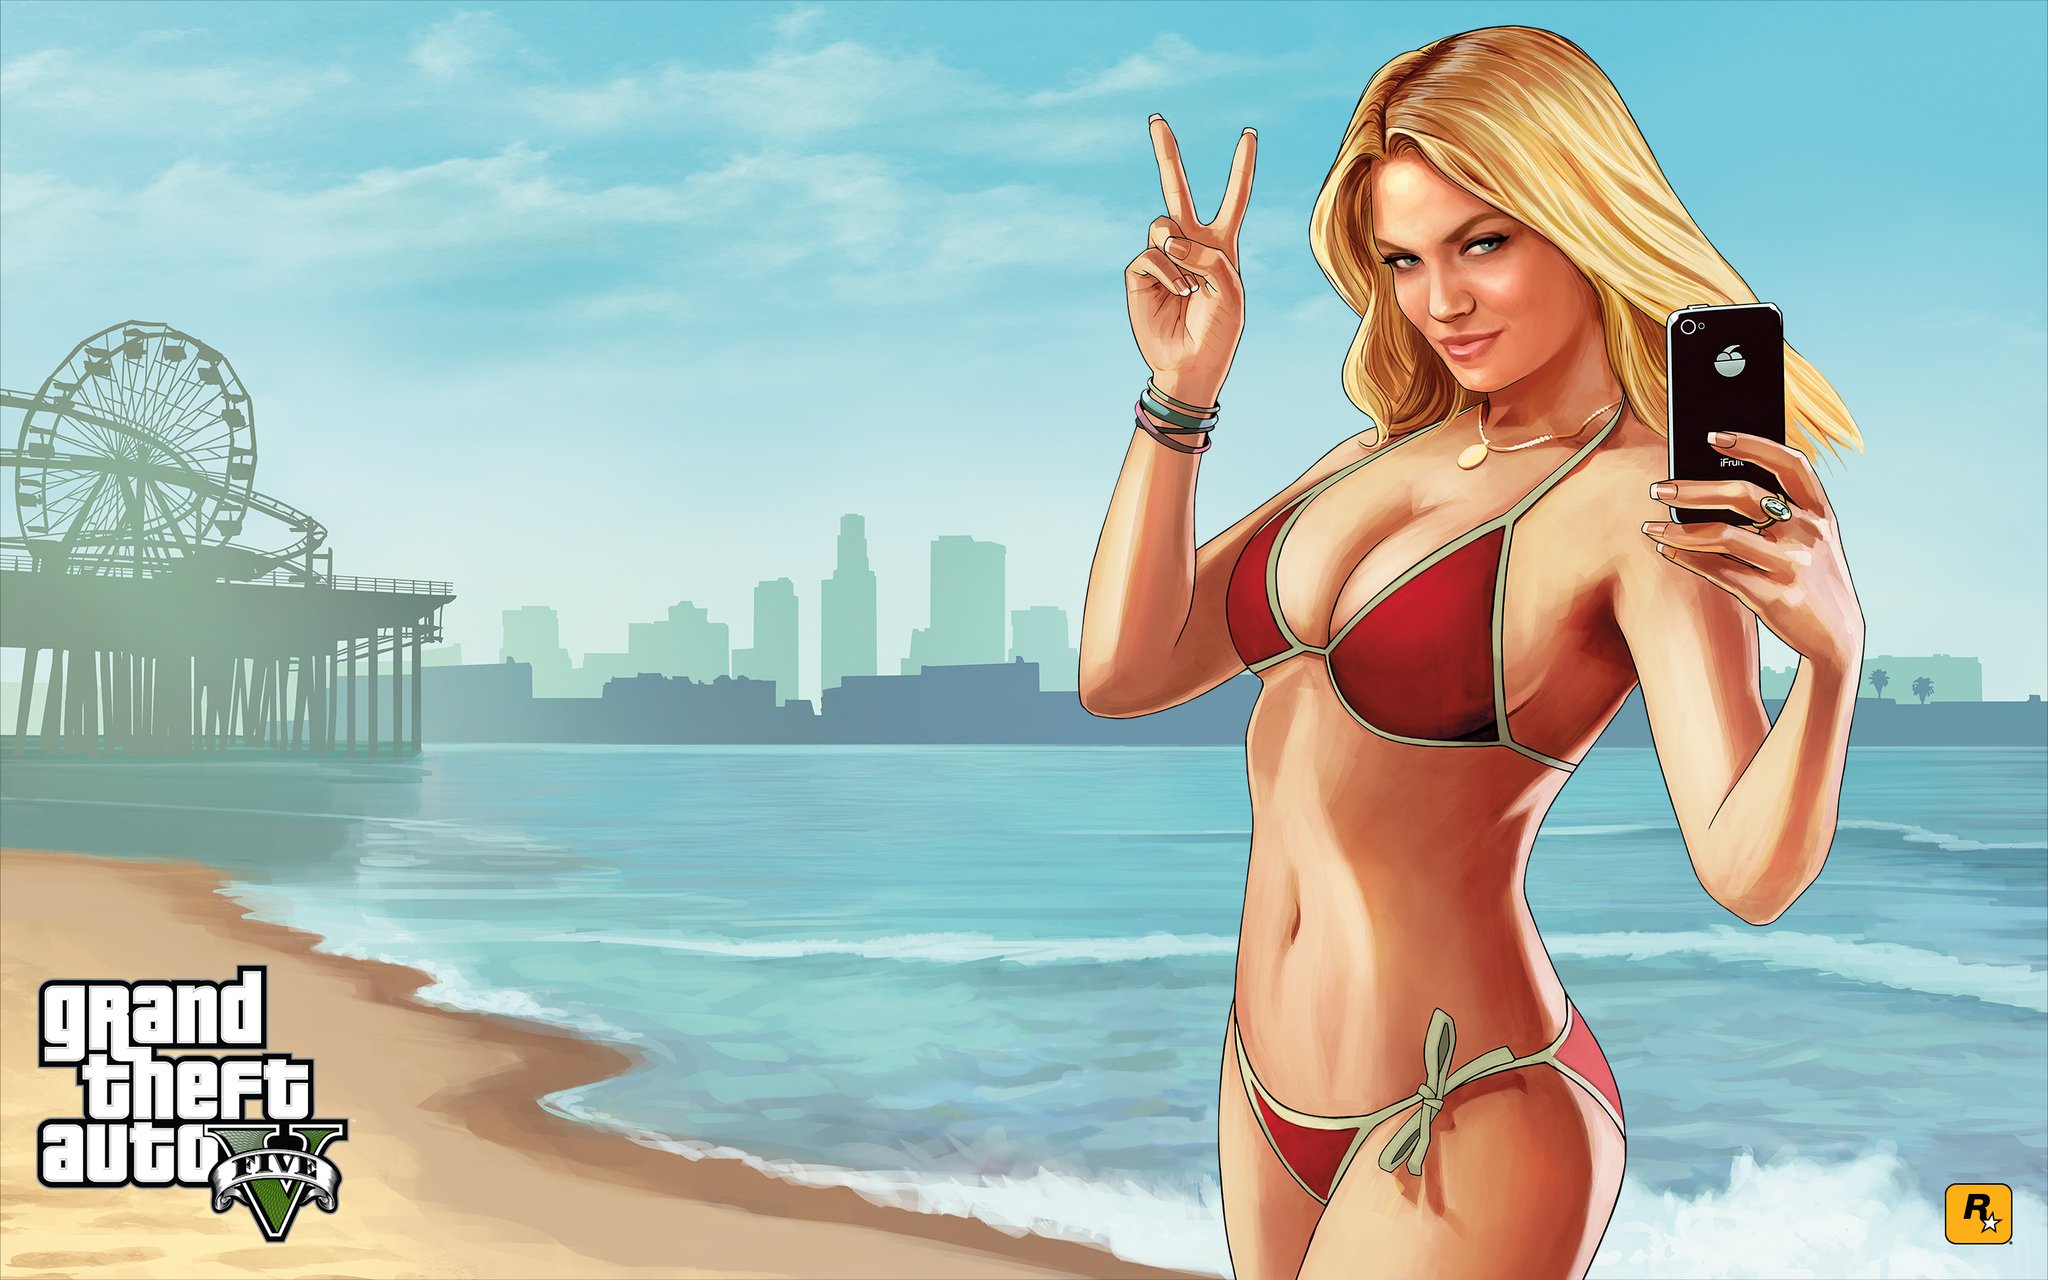 Gta V Blonde woman in red bikini on beach